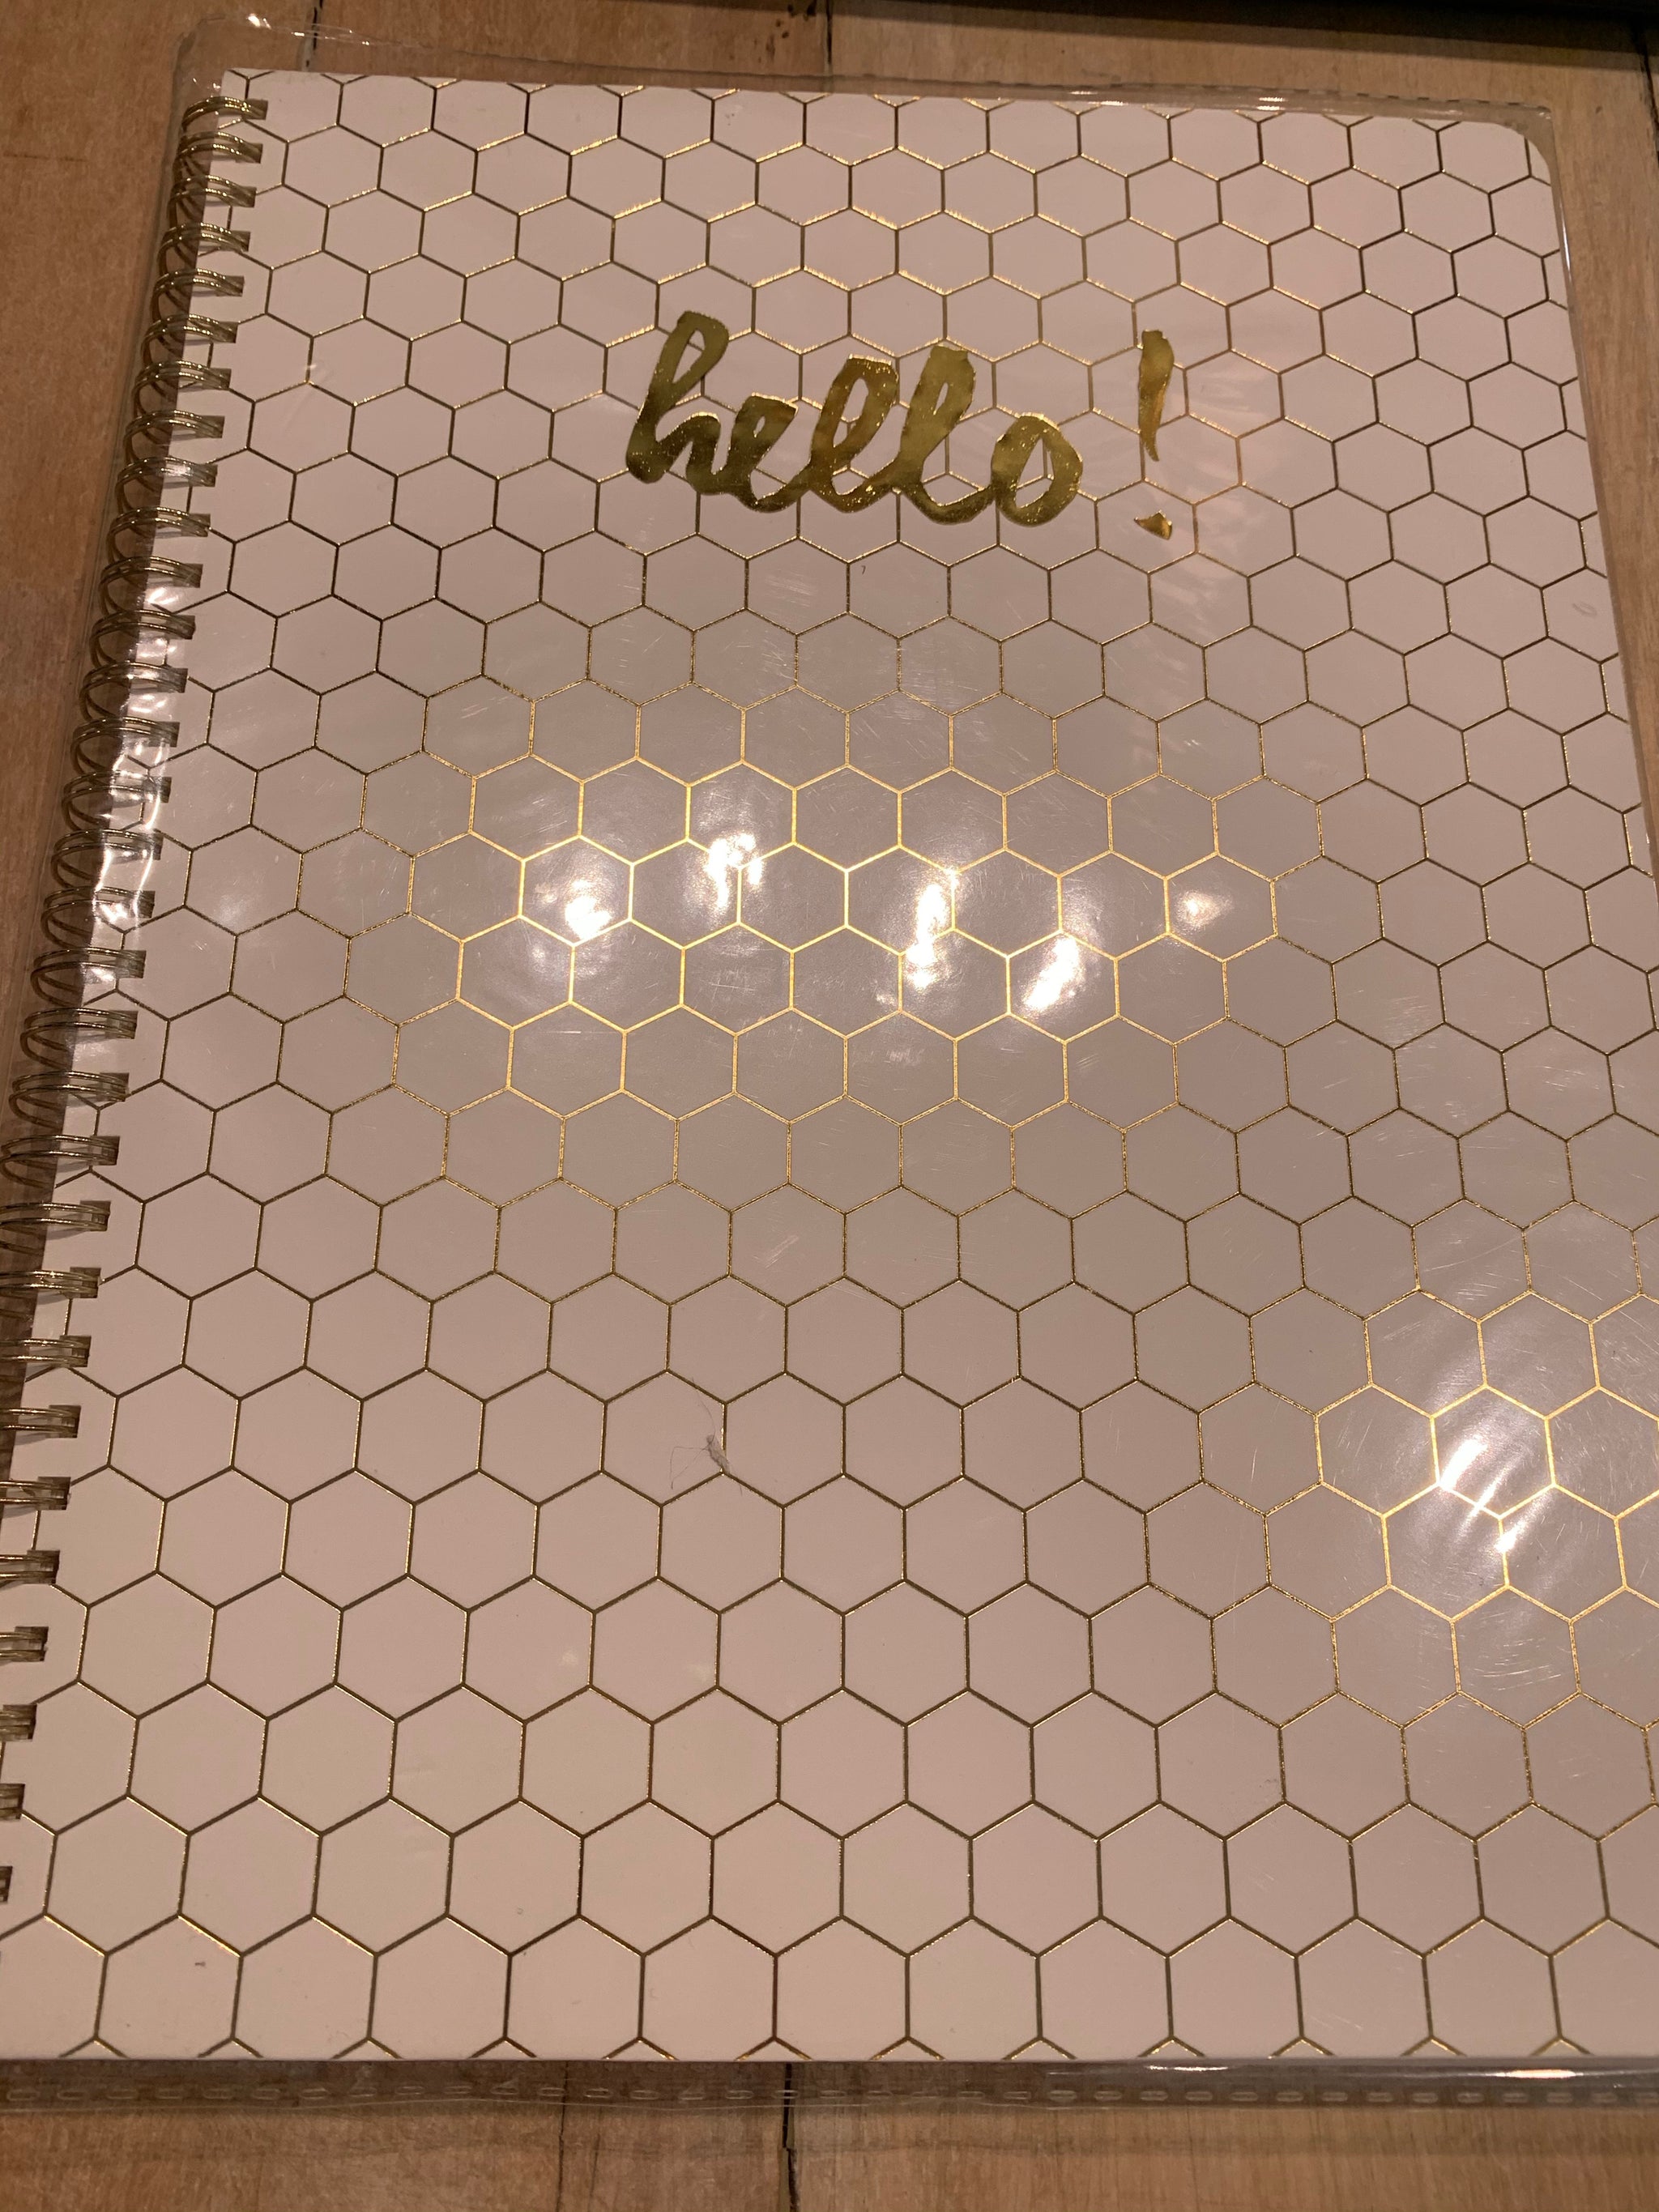 Large Spiral Notebook